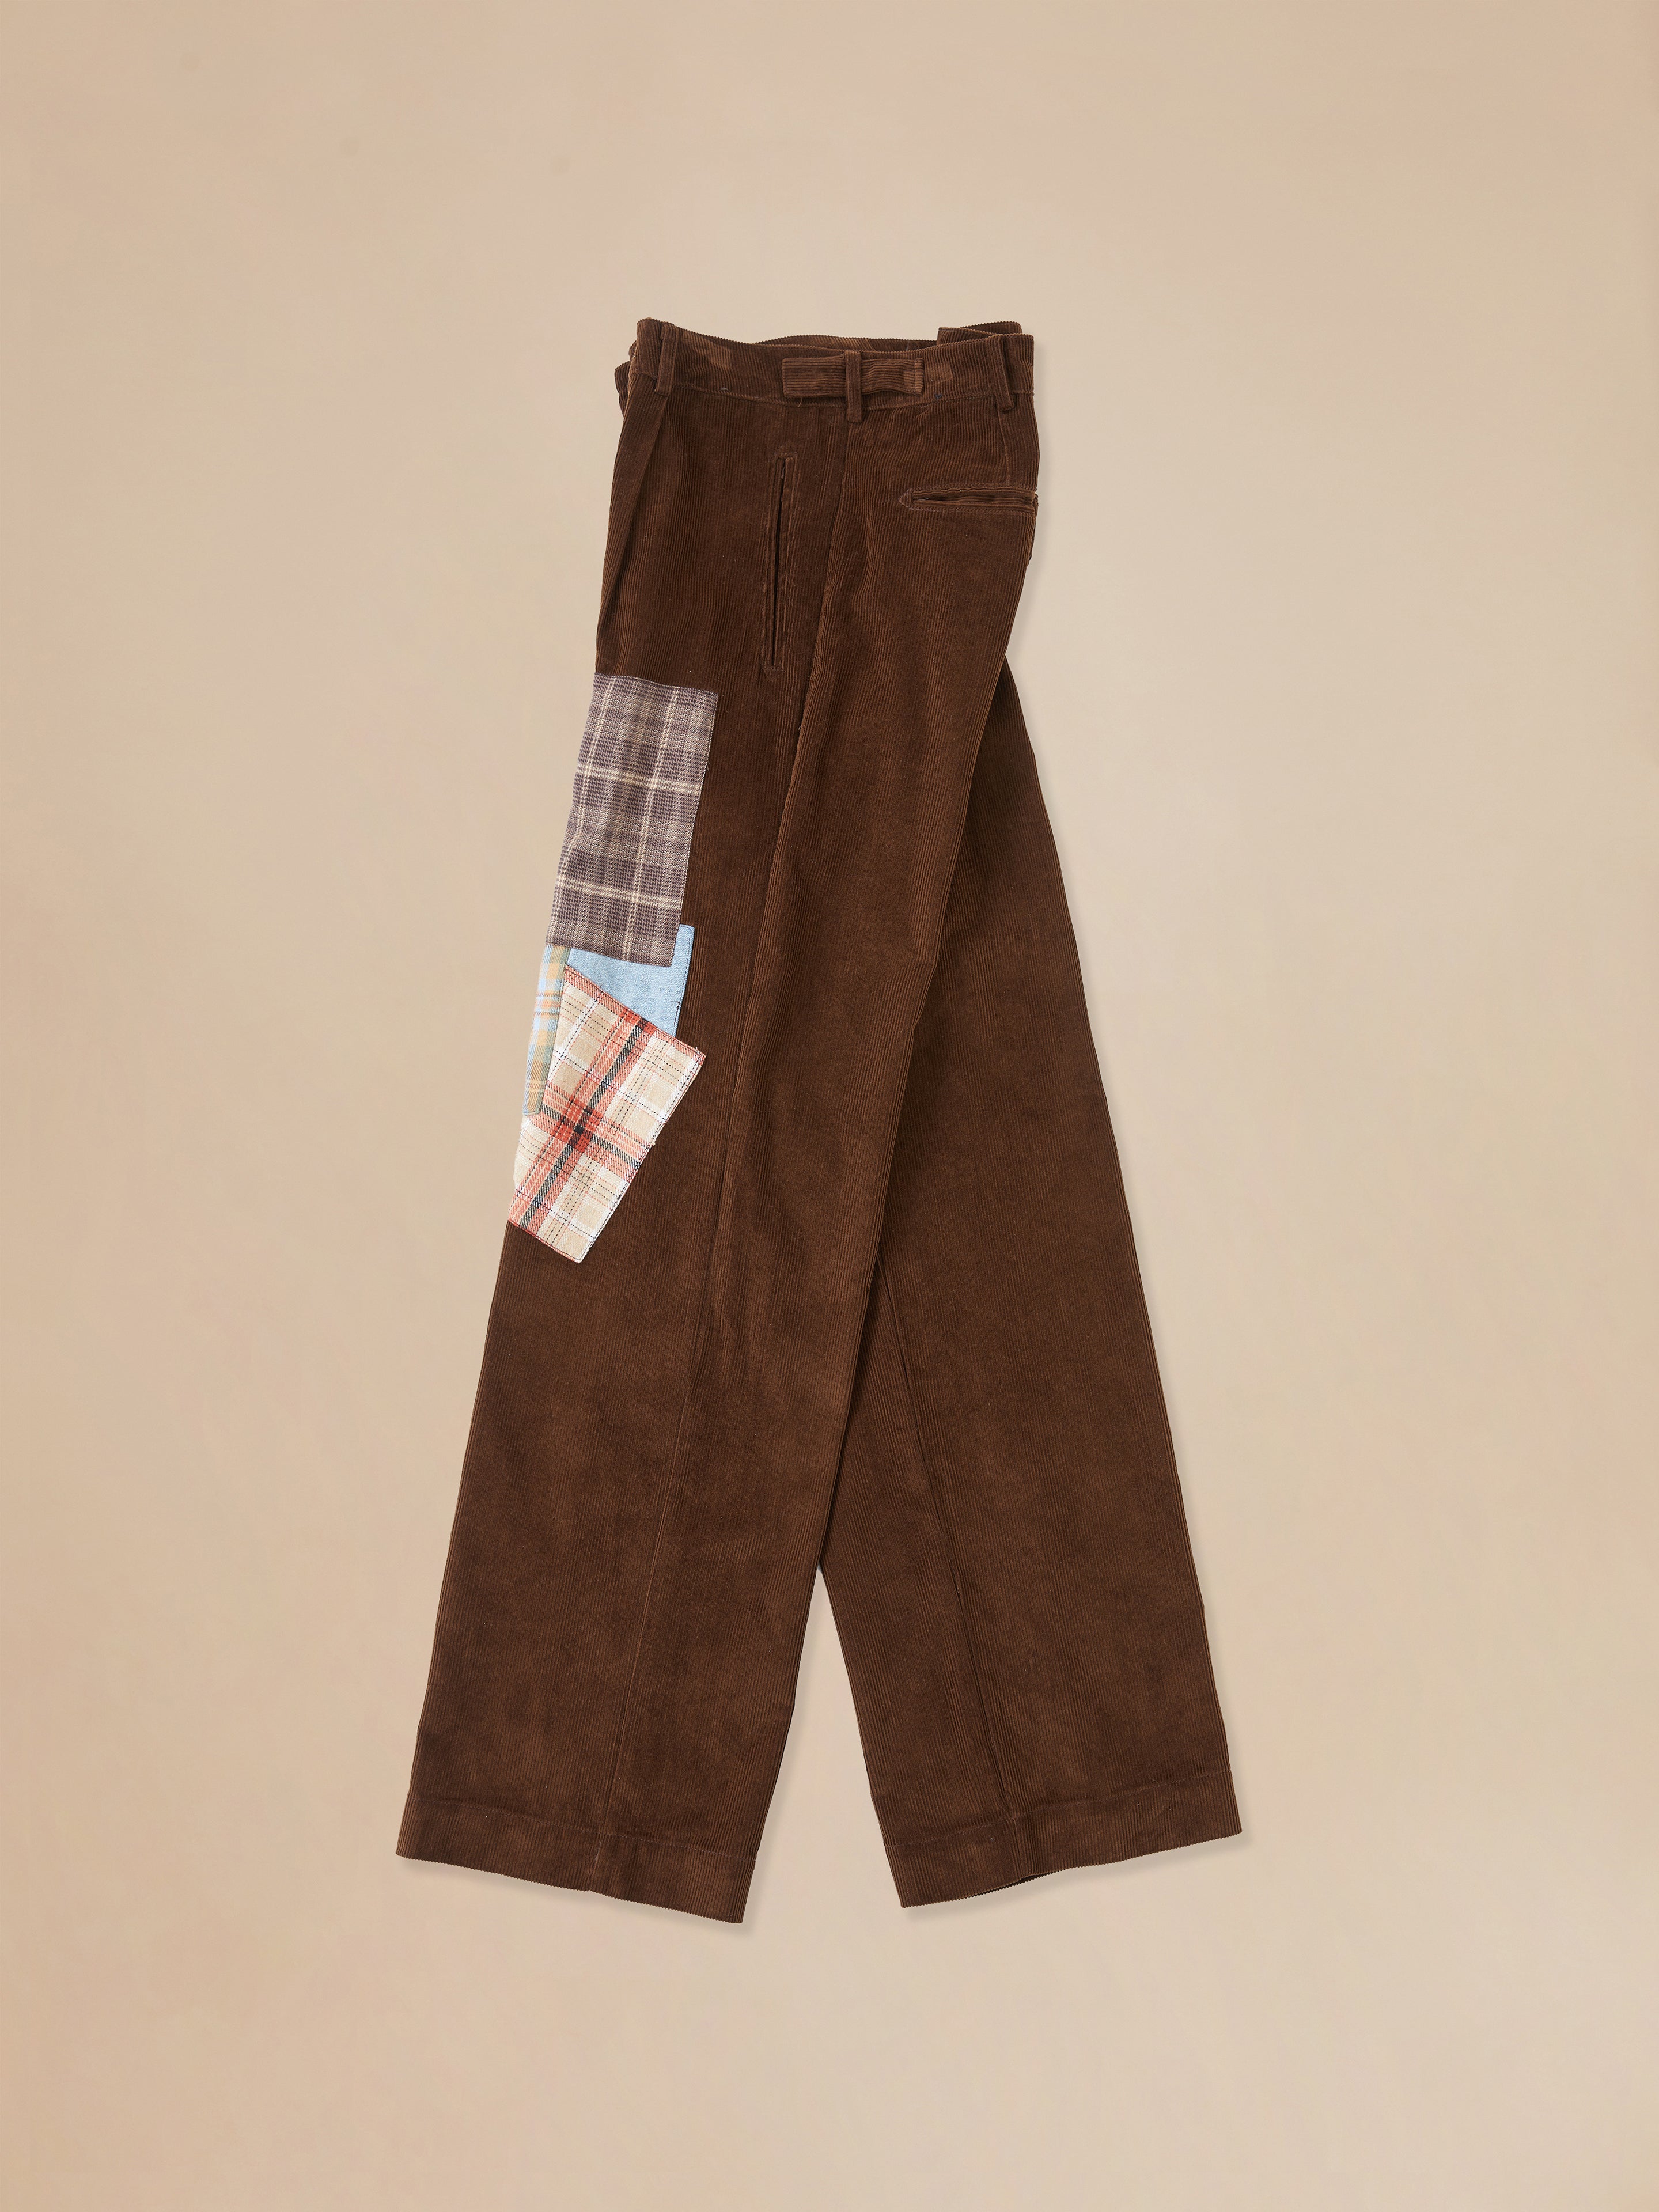 Hippie pants | Sharma trousers